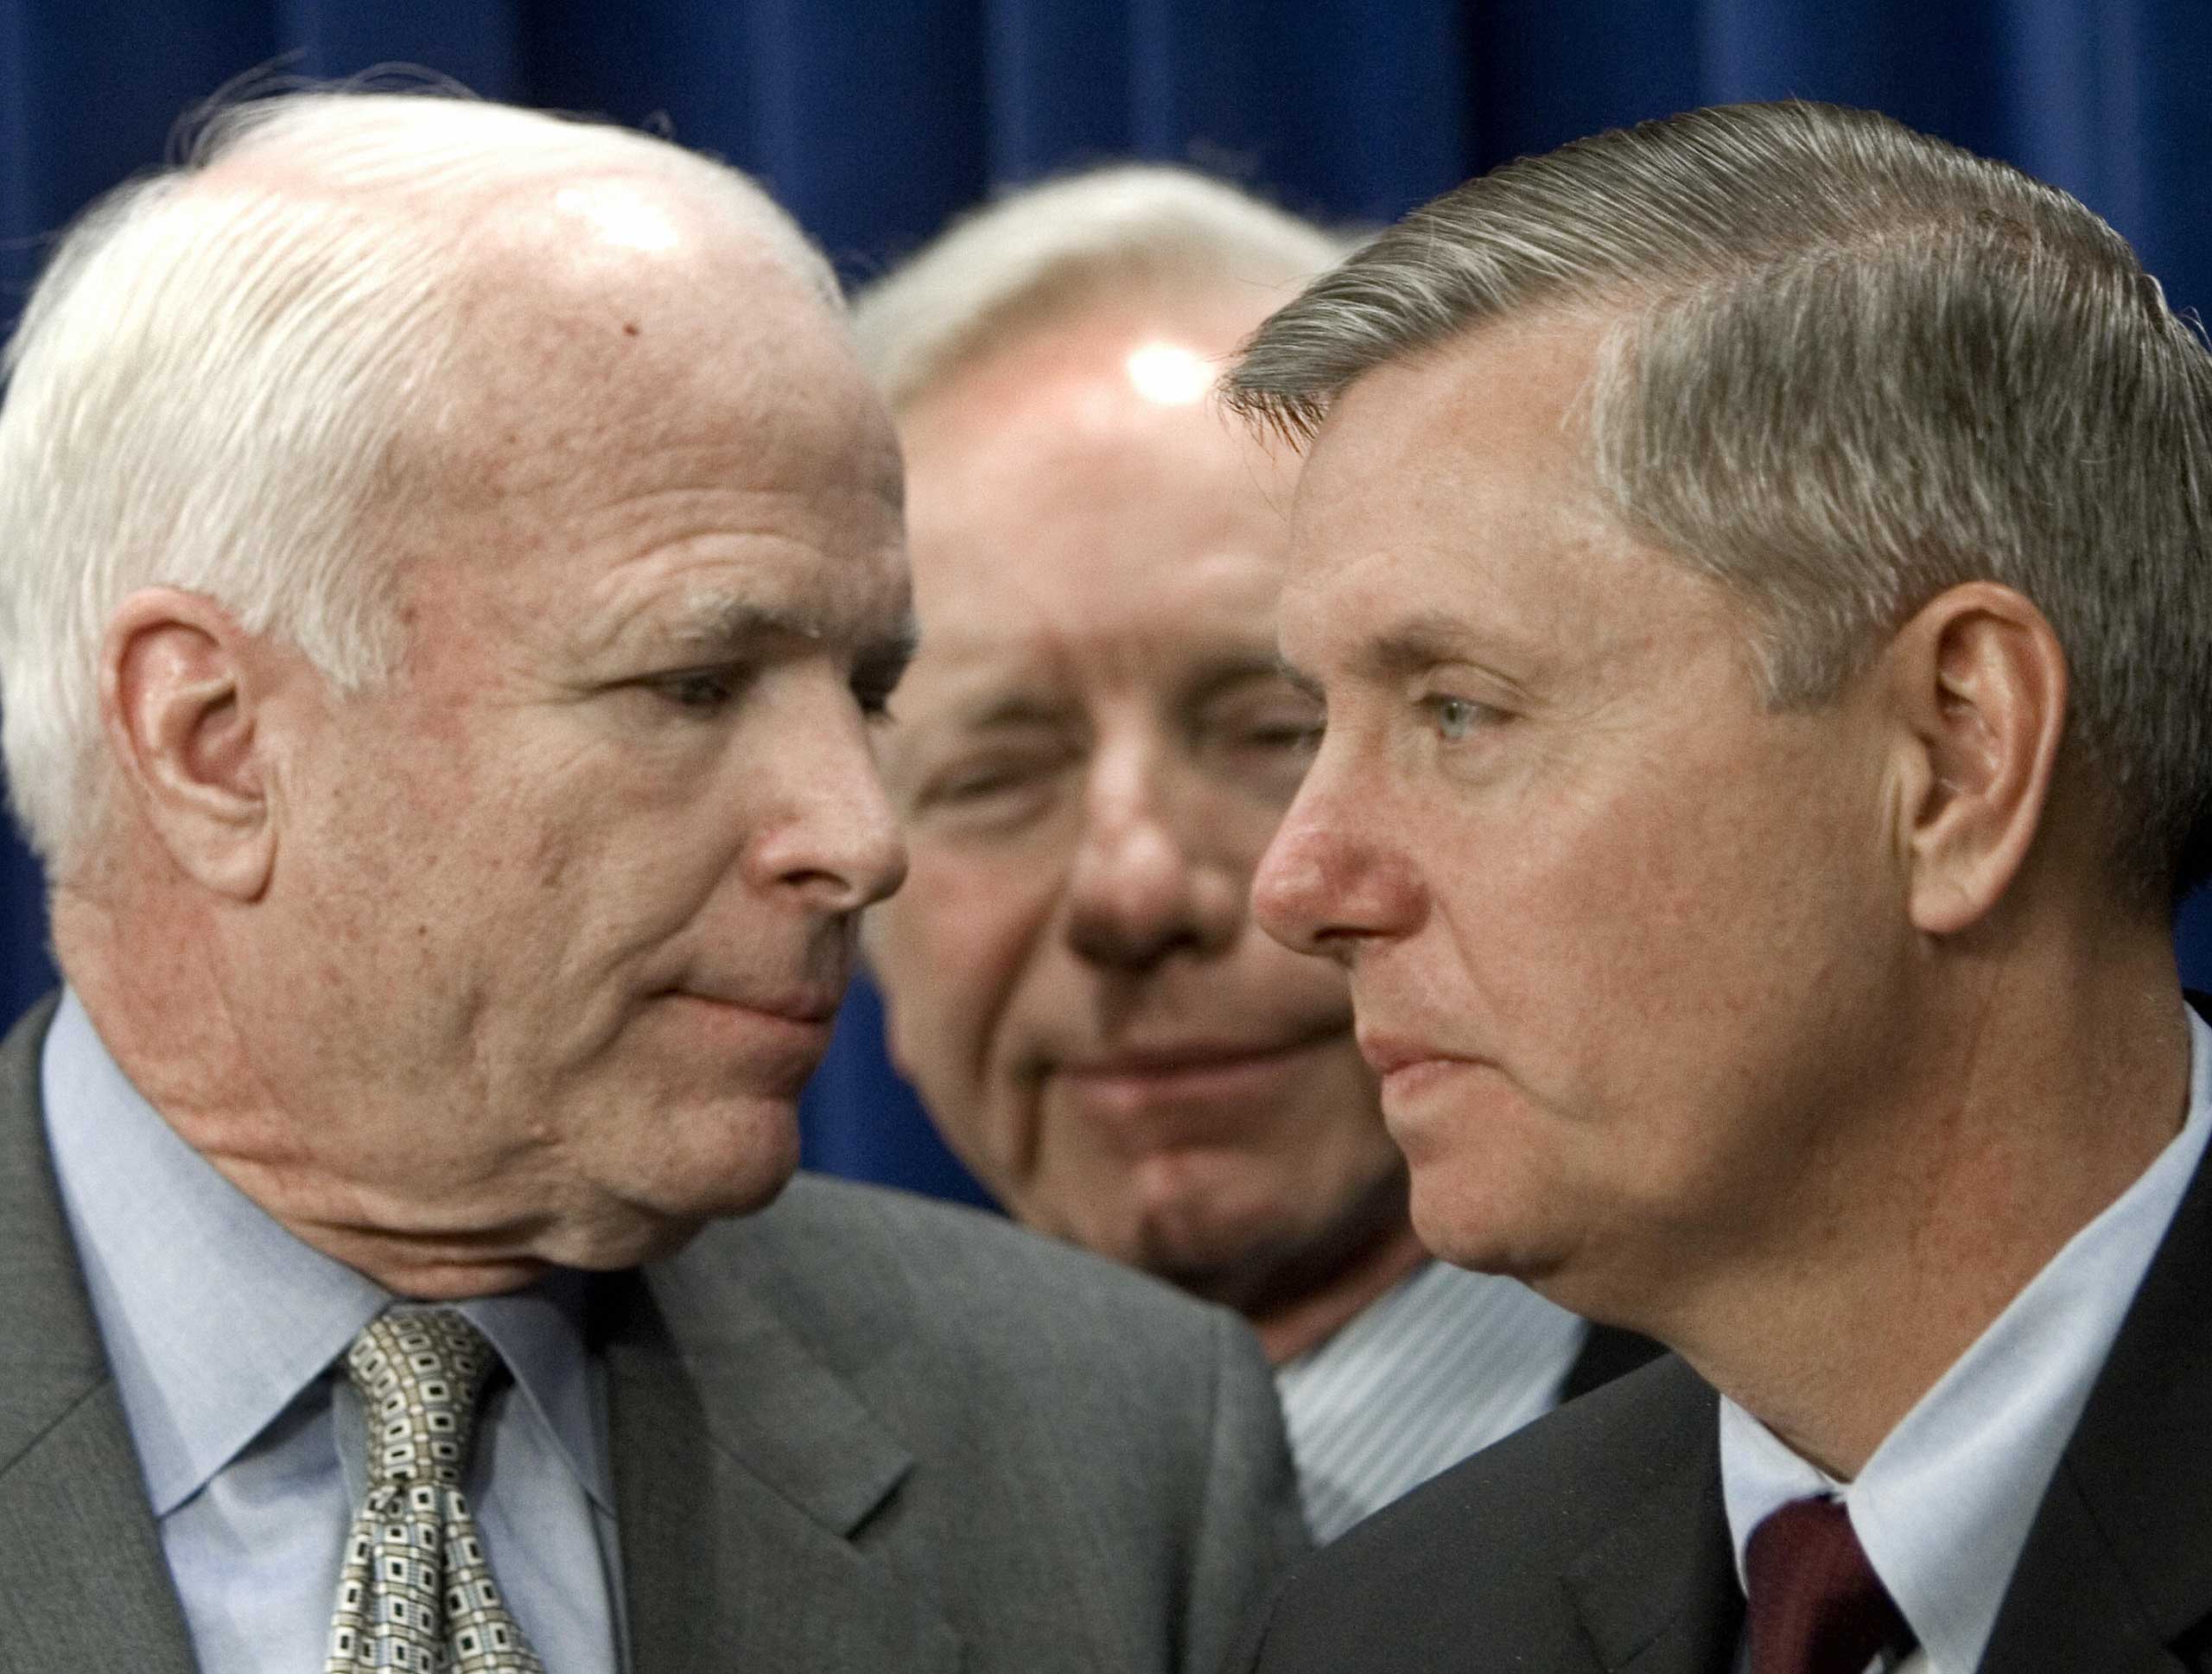 During their time in the Senate together, Arizona Sen. John McCain, Connecticut Sen. Joe Lieberman and South Carolina Sen. Lindsey Graham became close friends.